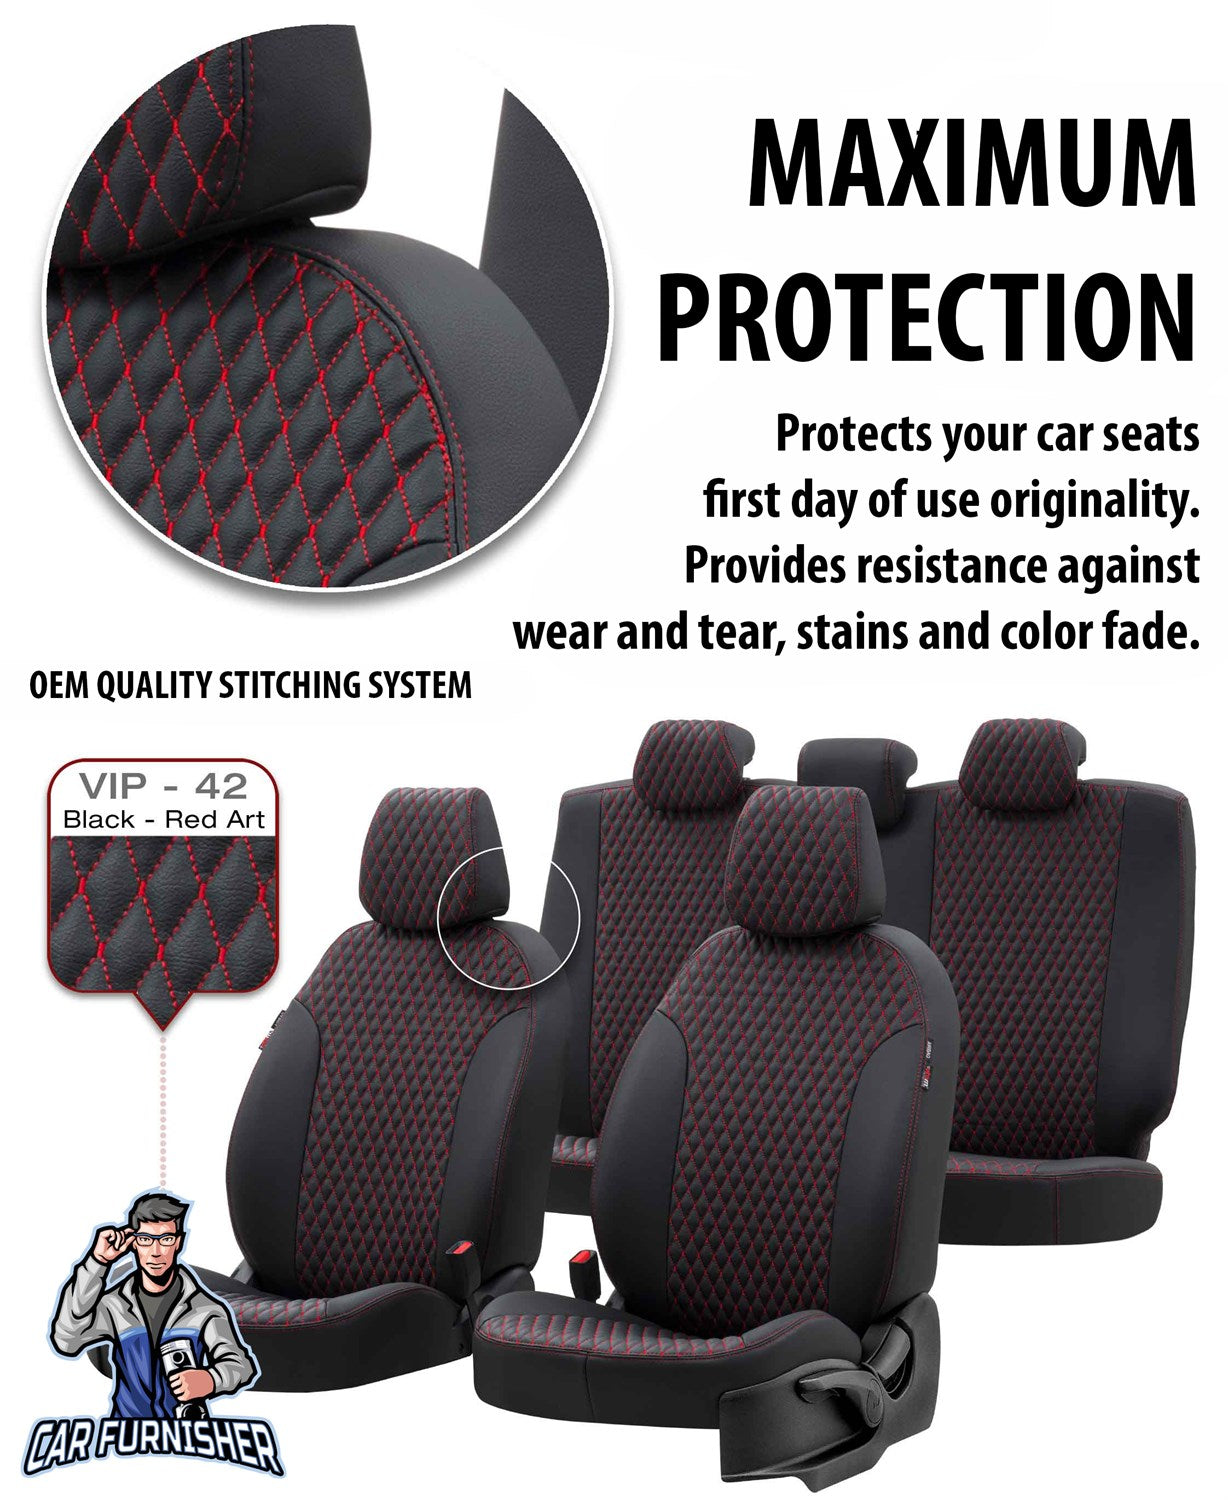 Hyundai Starex Seat Covers Amsterdam Leather Design Smoked Black Leather